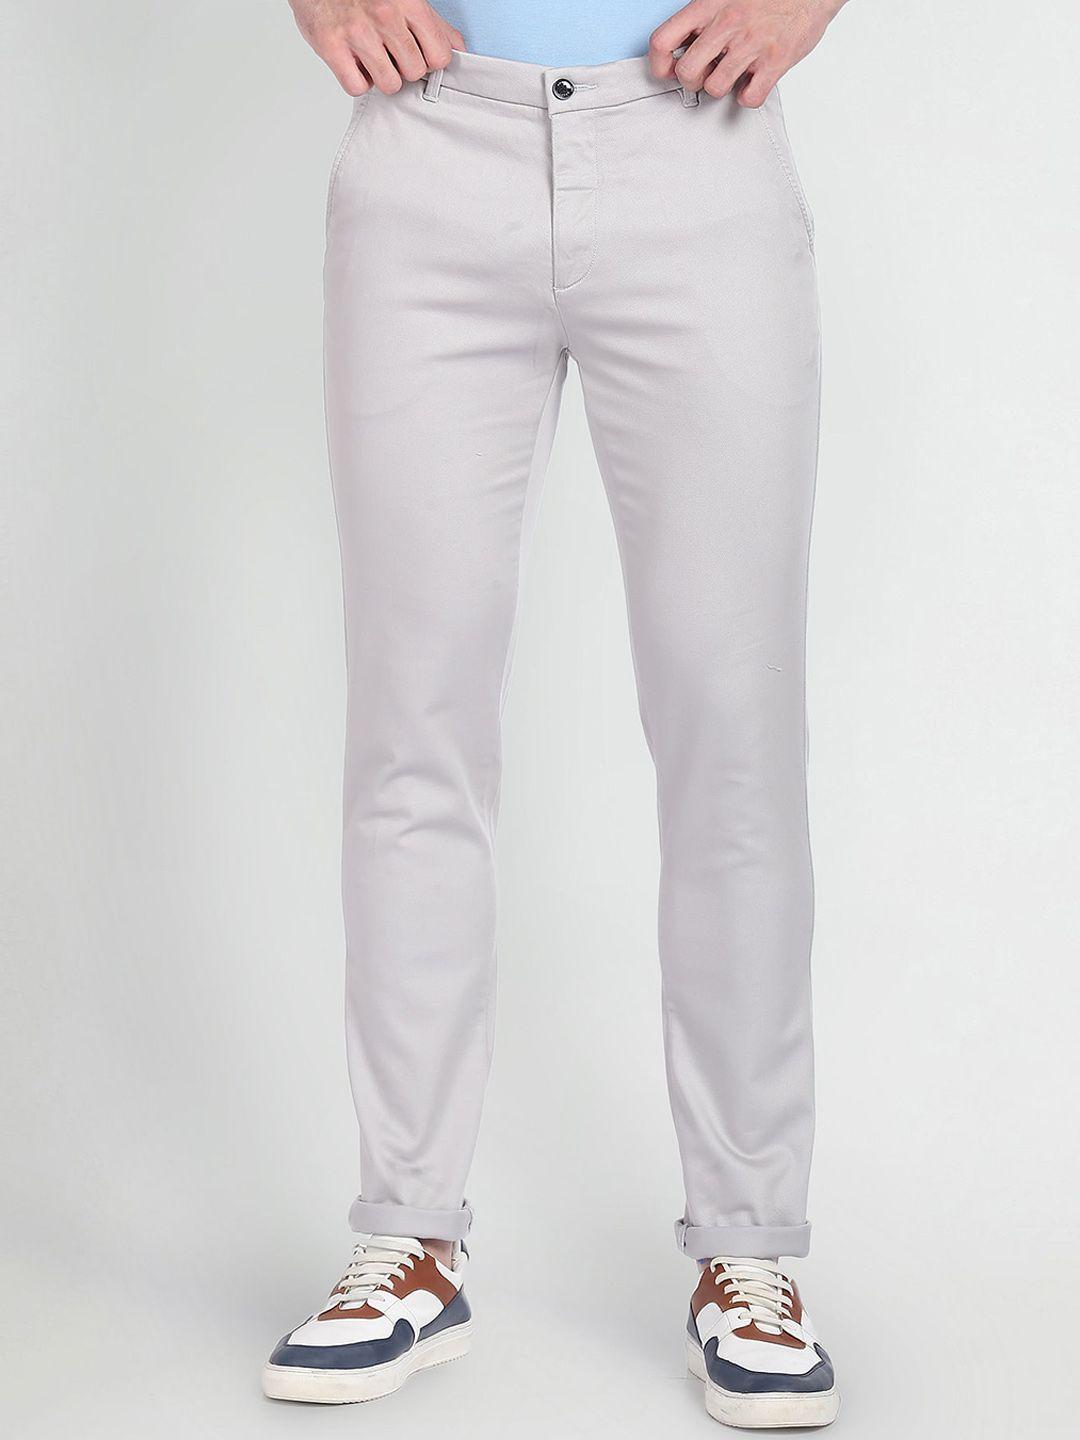 arrow-sport-men-skinny-fit-low-rise-cotton-trousers